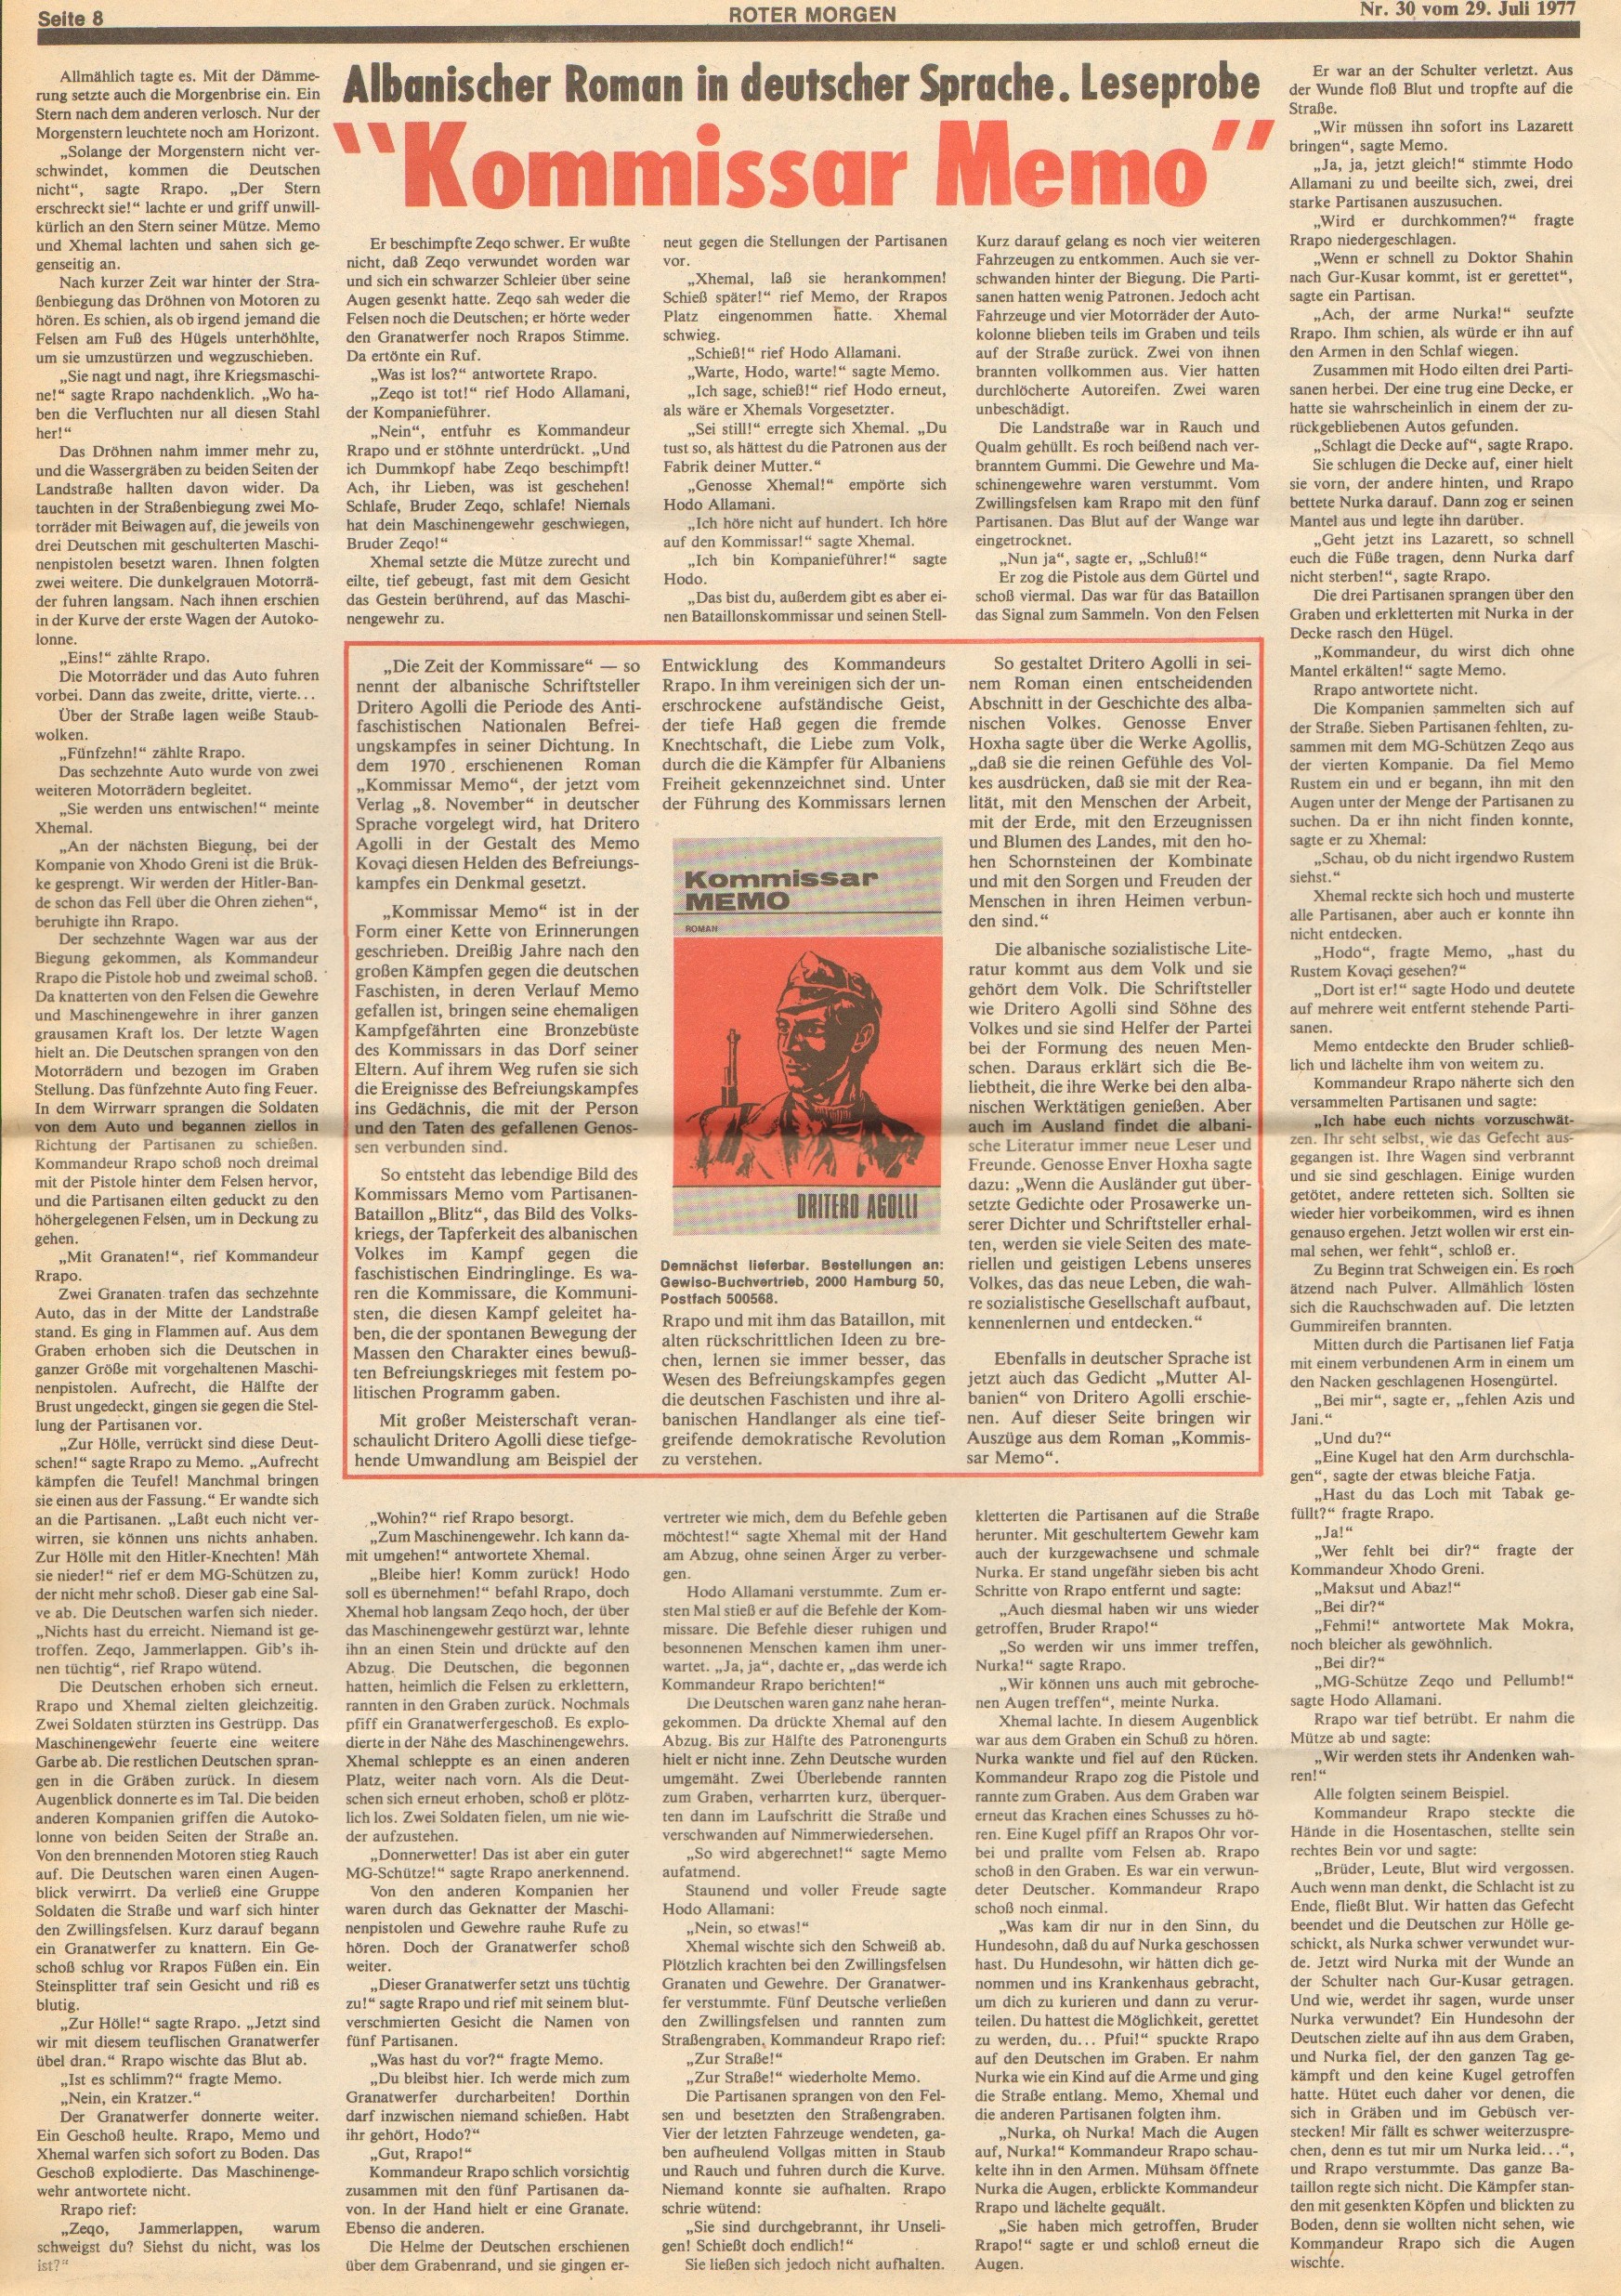 Roter Morgen, 11. Jg., 29. Juli 1977, Nr. 30, Seite 8